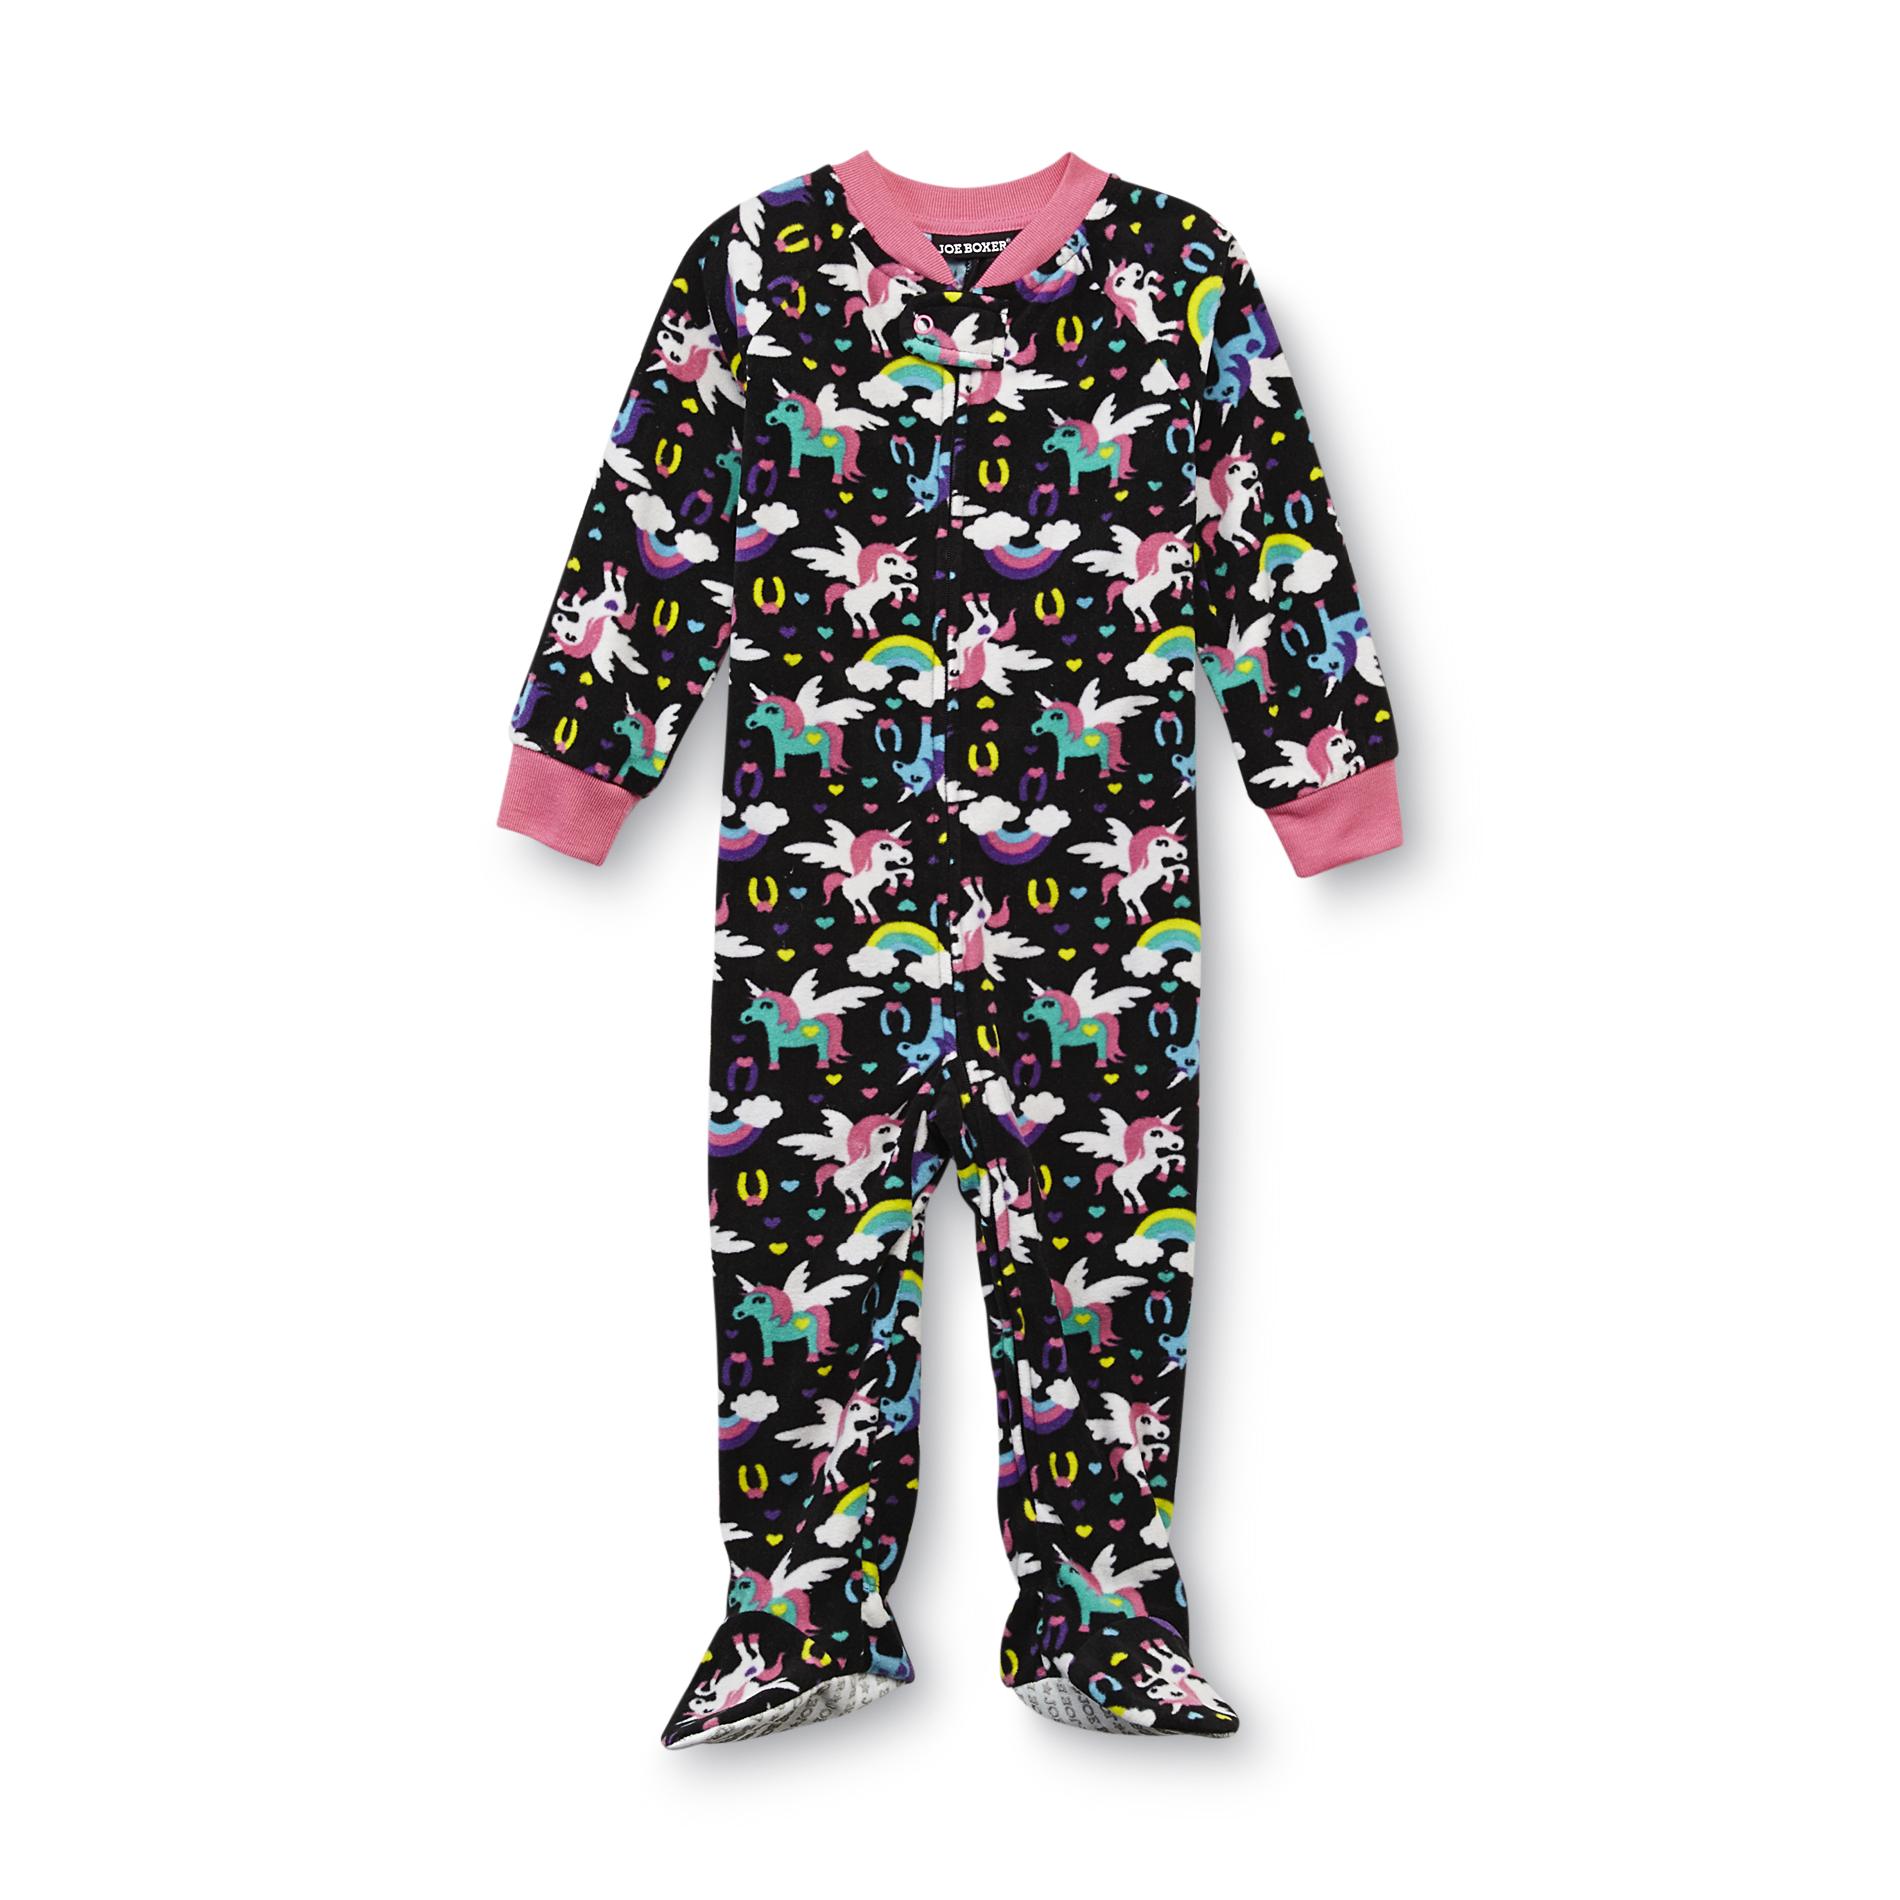 Joe Boxer Infant & Toddler Girl's Footed Sleeper Pajamas - Unicorns